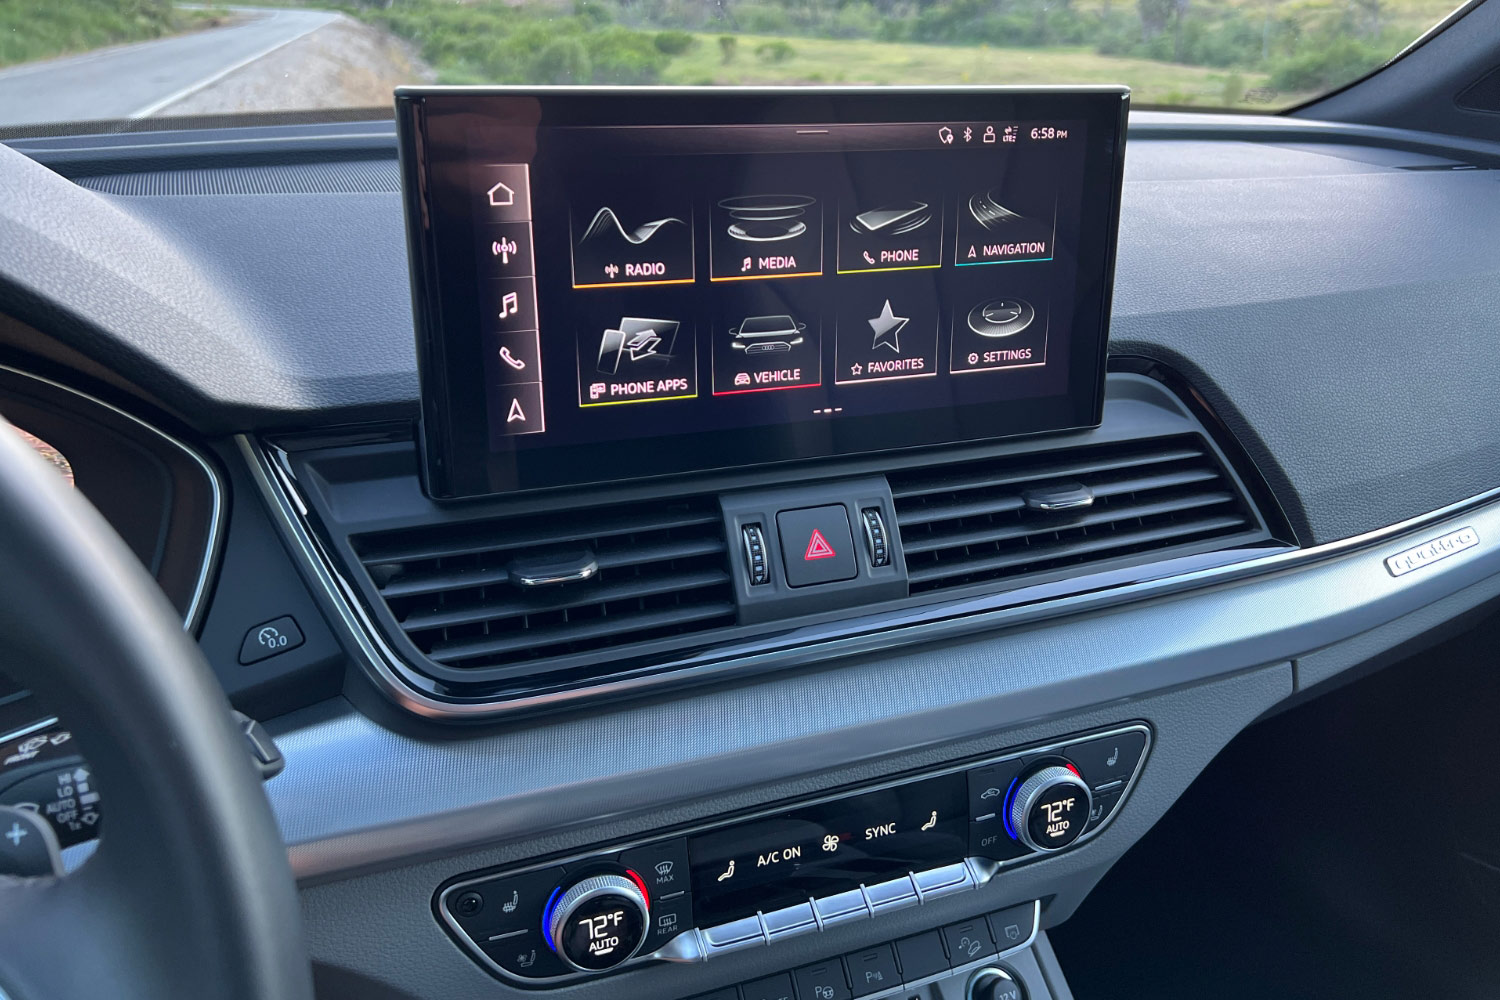 Center dashboard infotainment screen in an Audi Q5.